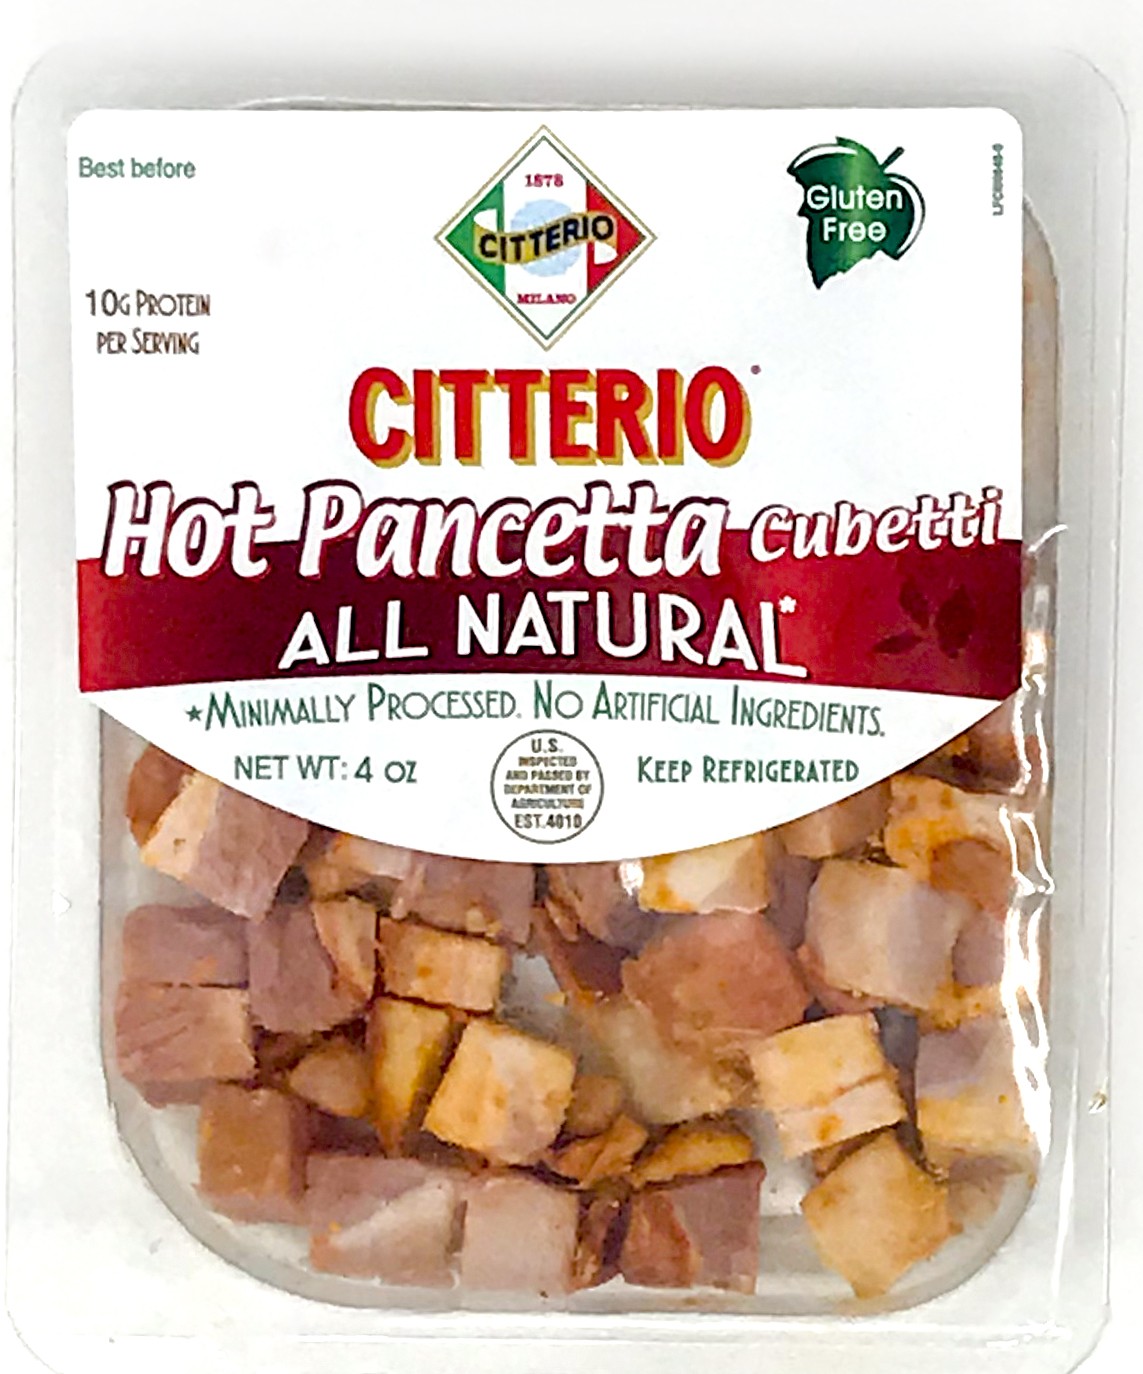 Hot Pancetta Cubetti